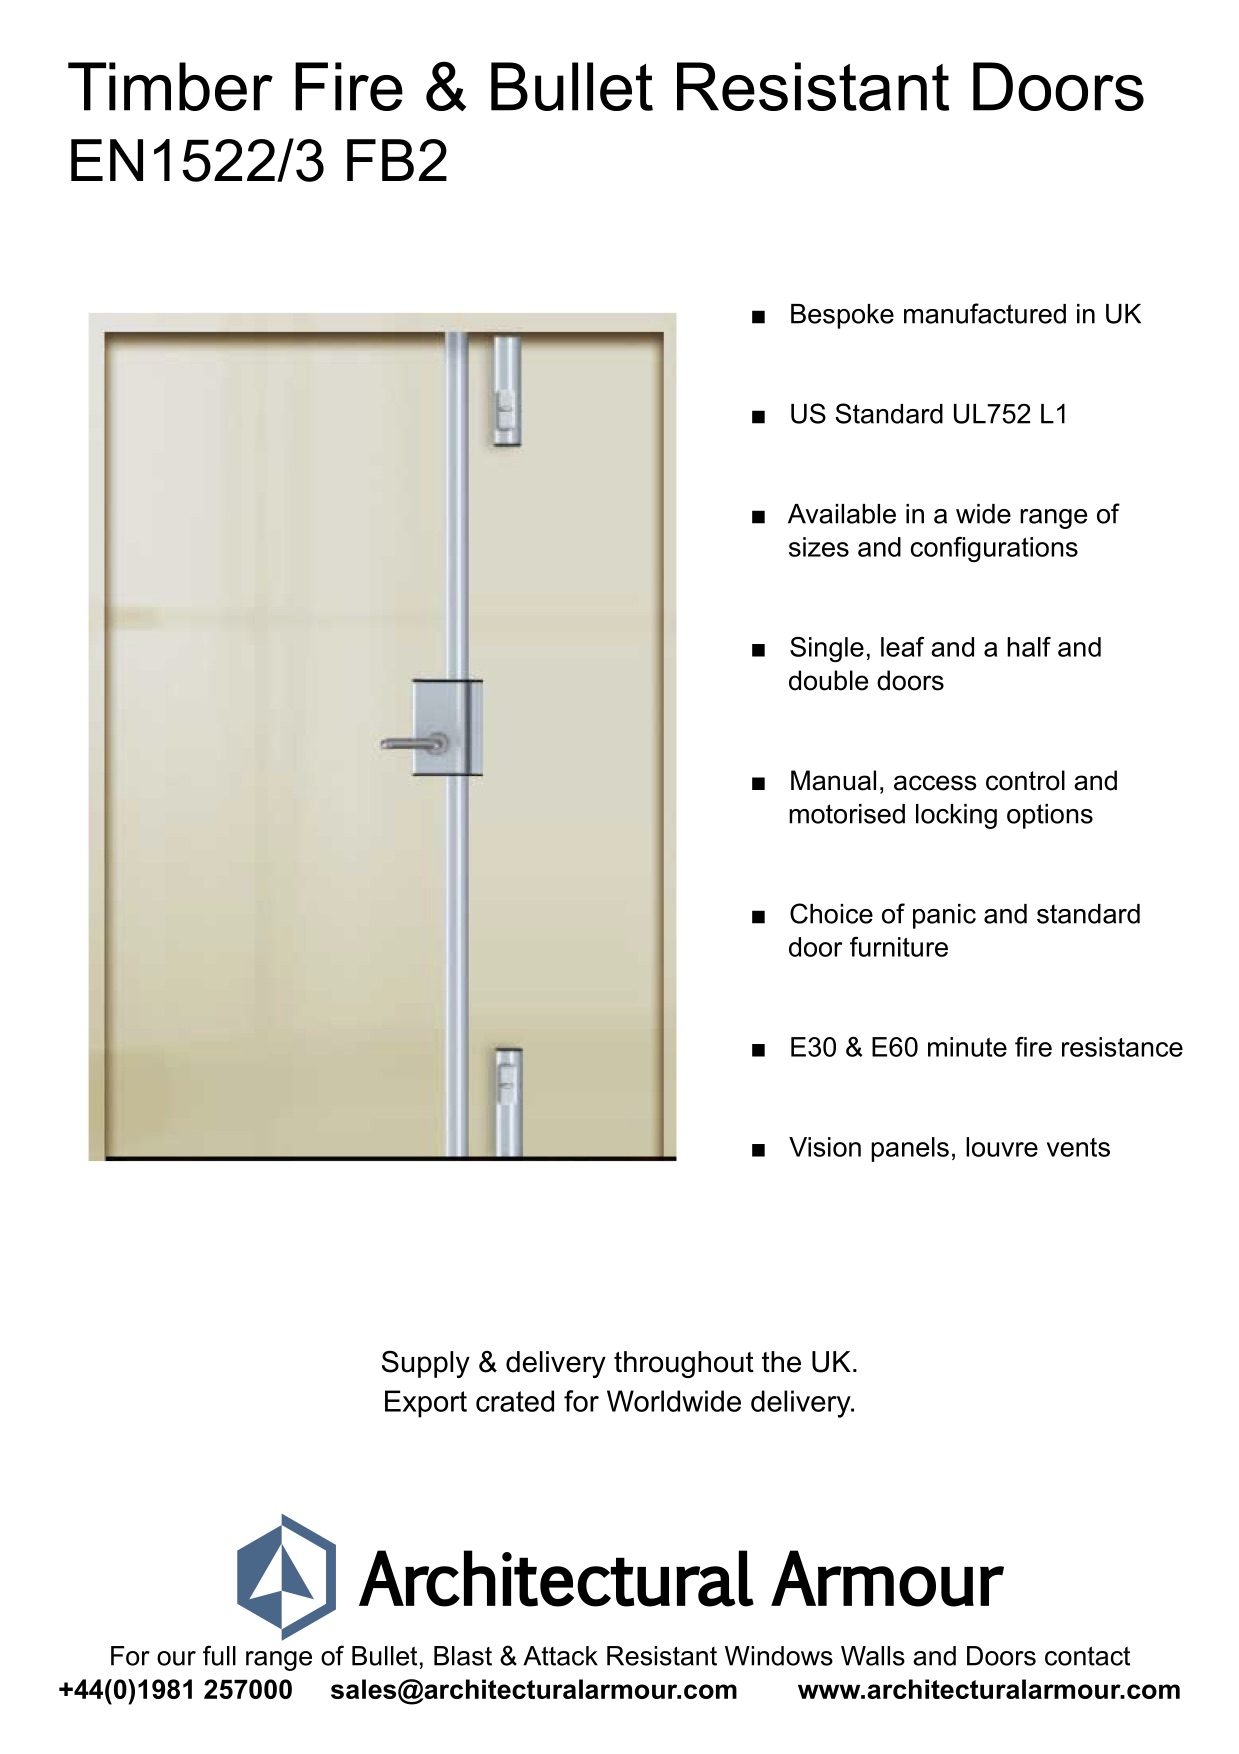 Fire-Resistant-and-Bullet-Resistant-EN1522-3-FB2-Timber-Doors